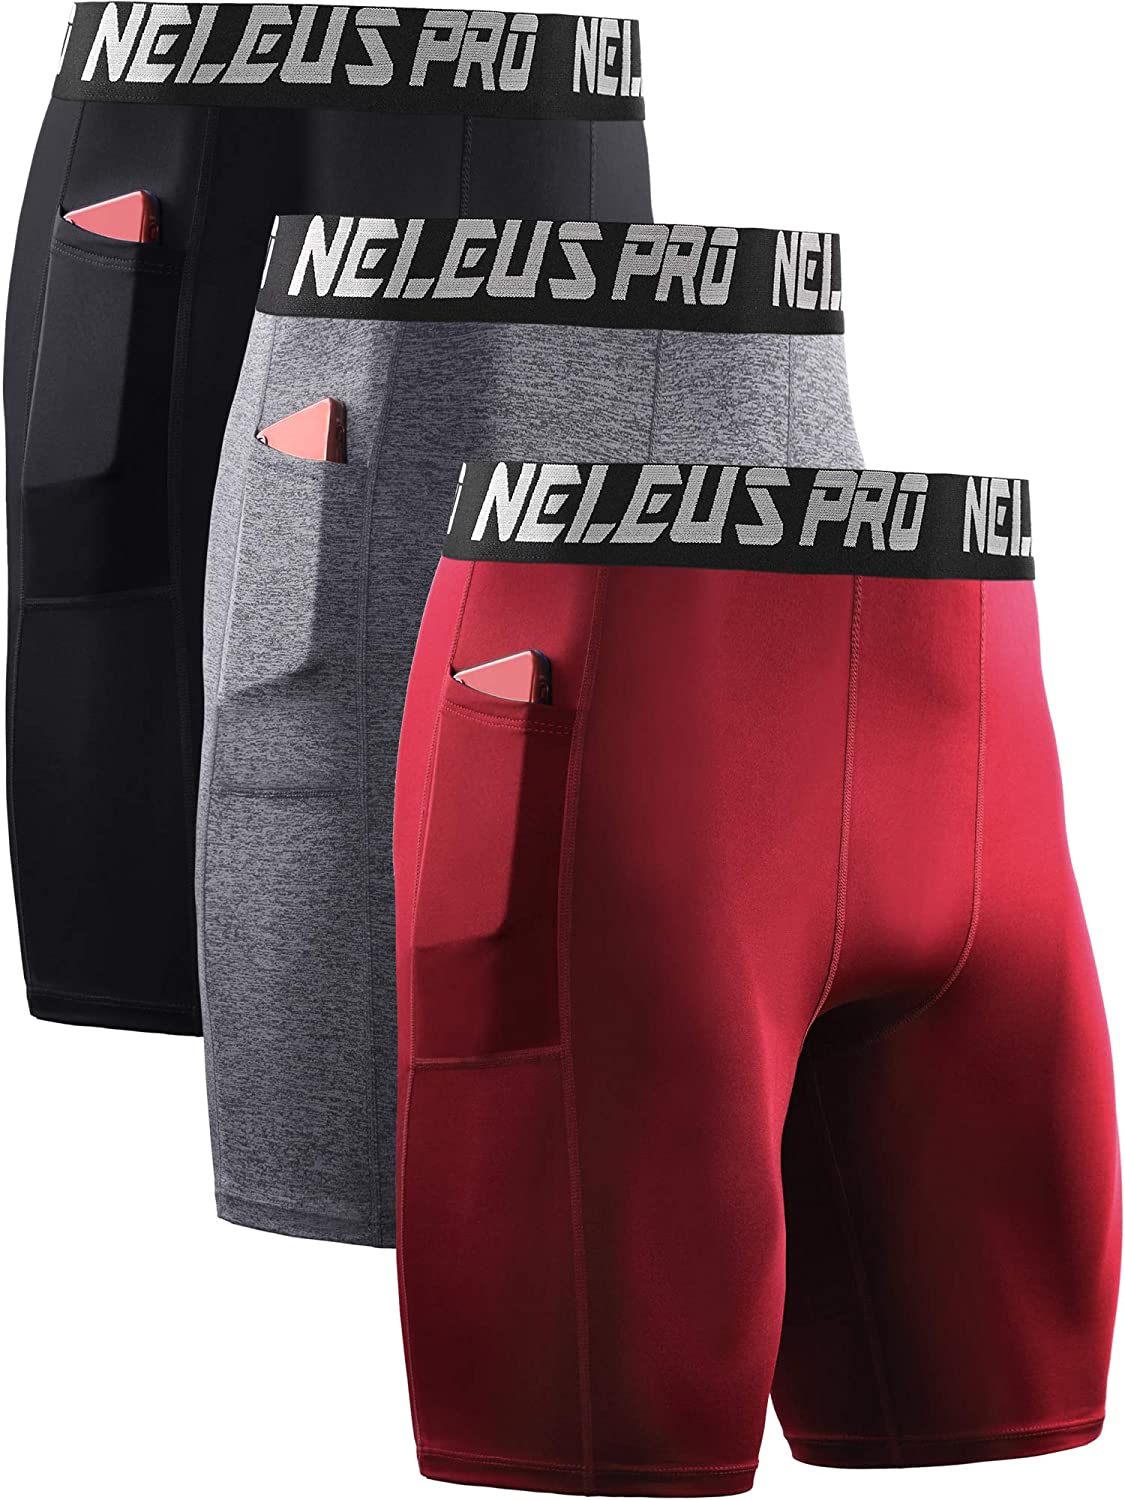 Neleus Men's Compression Shorts Pack of 3 